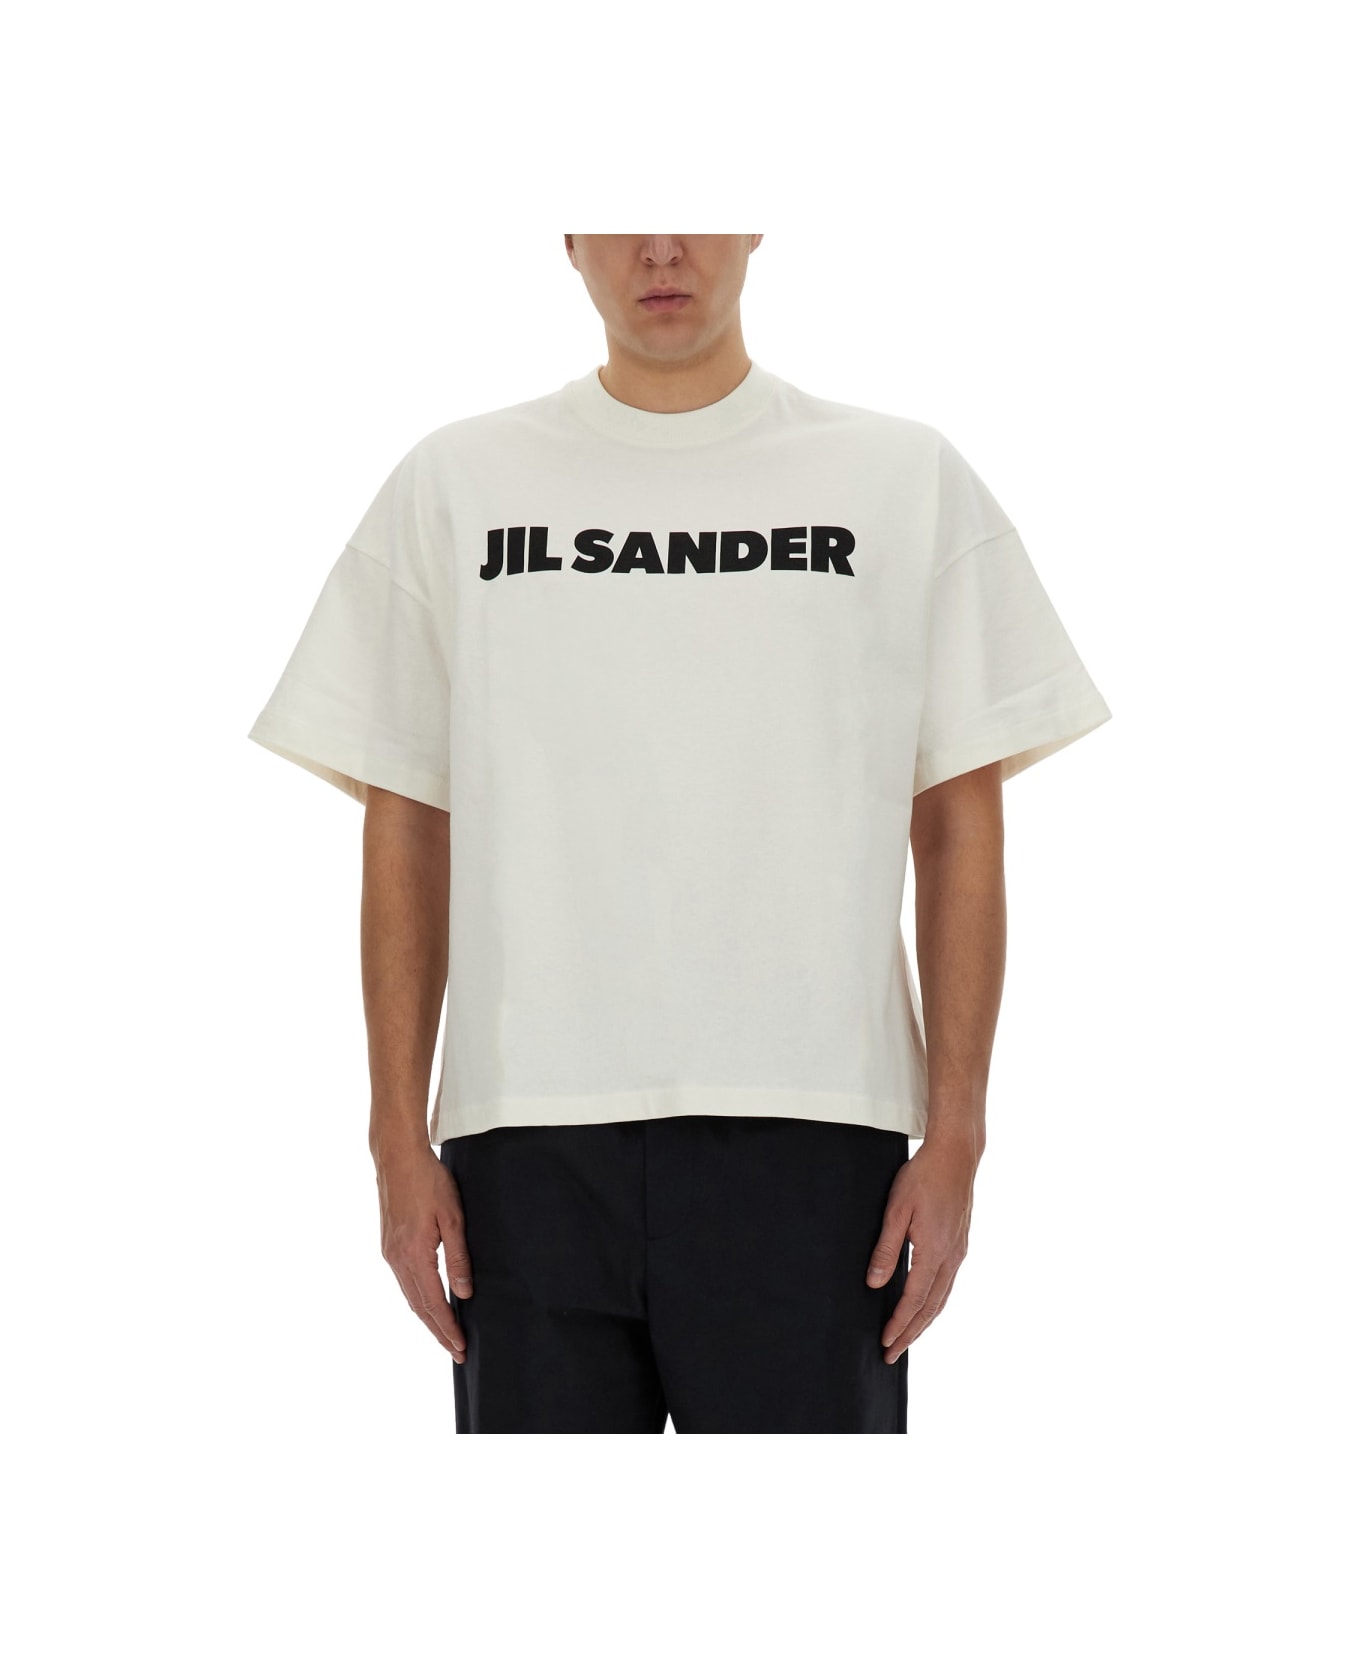 Jil Sander T-shirt With Print - IVORY